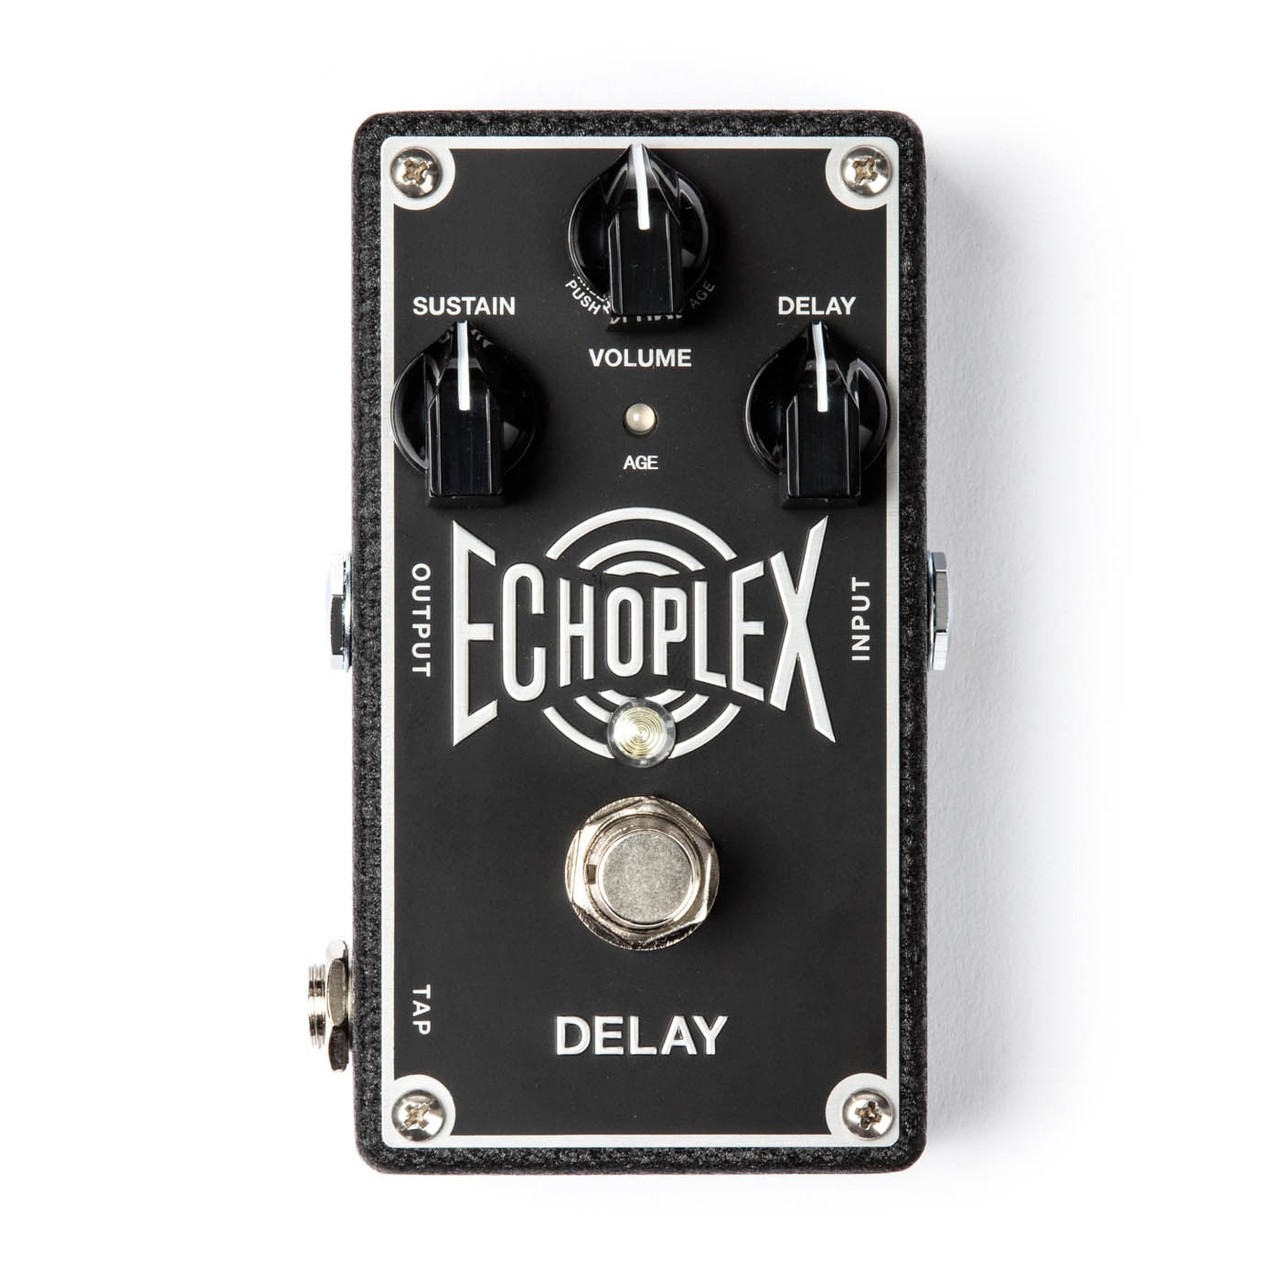 DUNLOP - Echoplex Delay